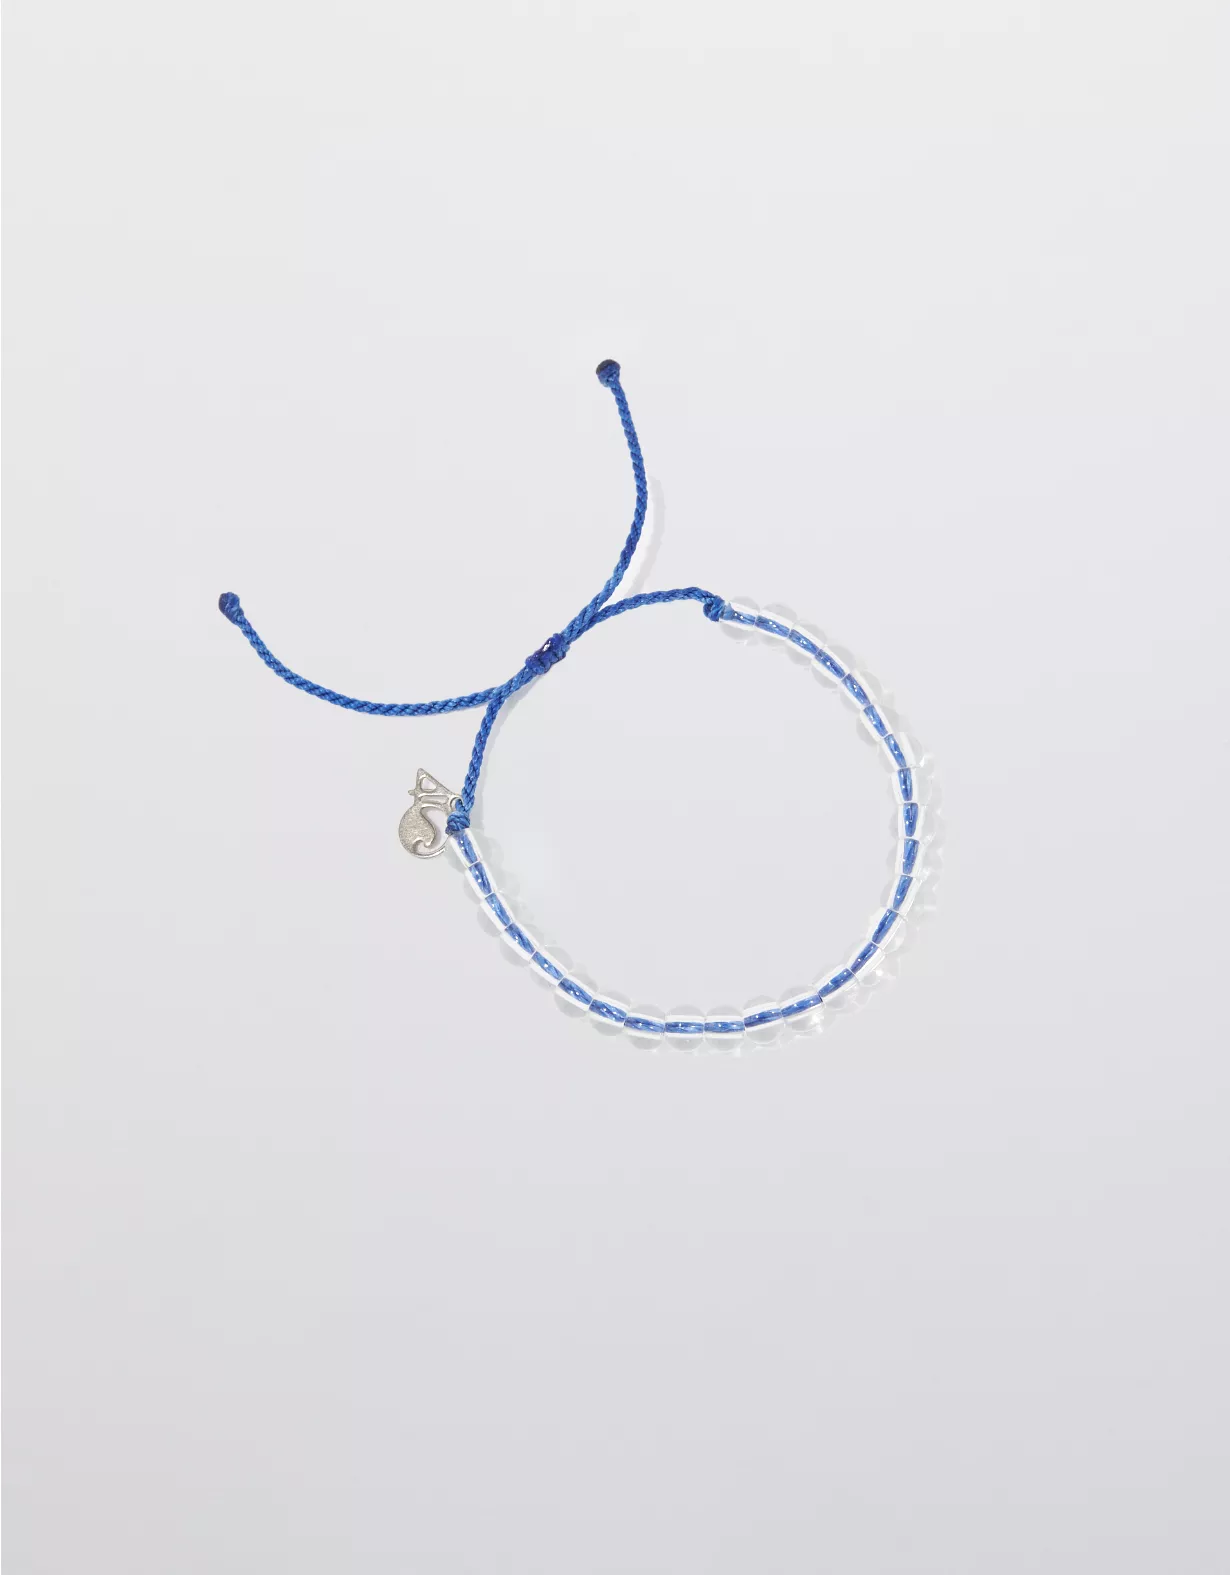 4ocean Signature Blue Beaded Bracelet